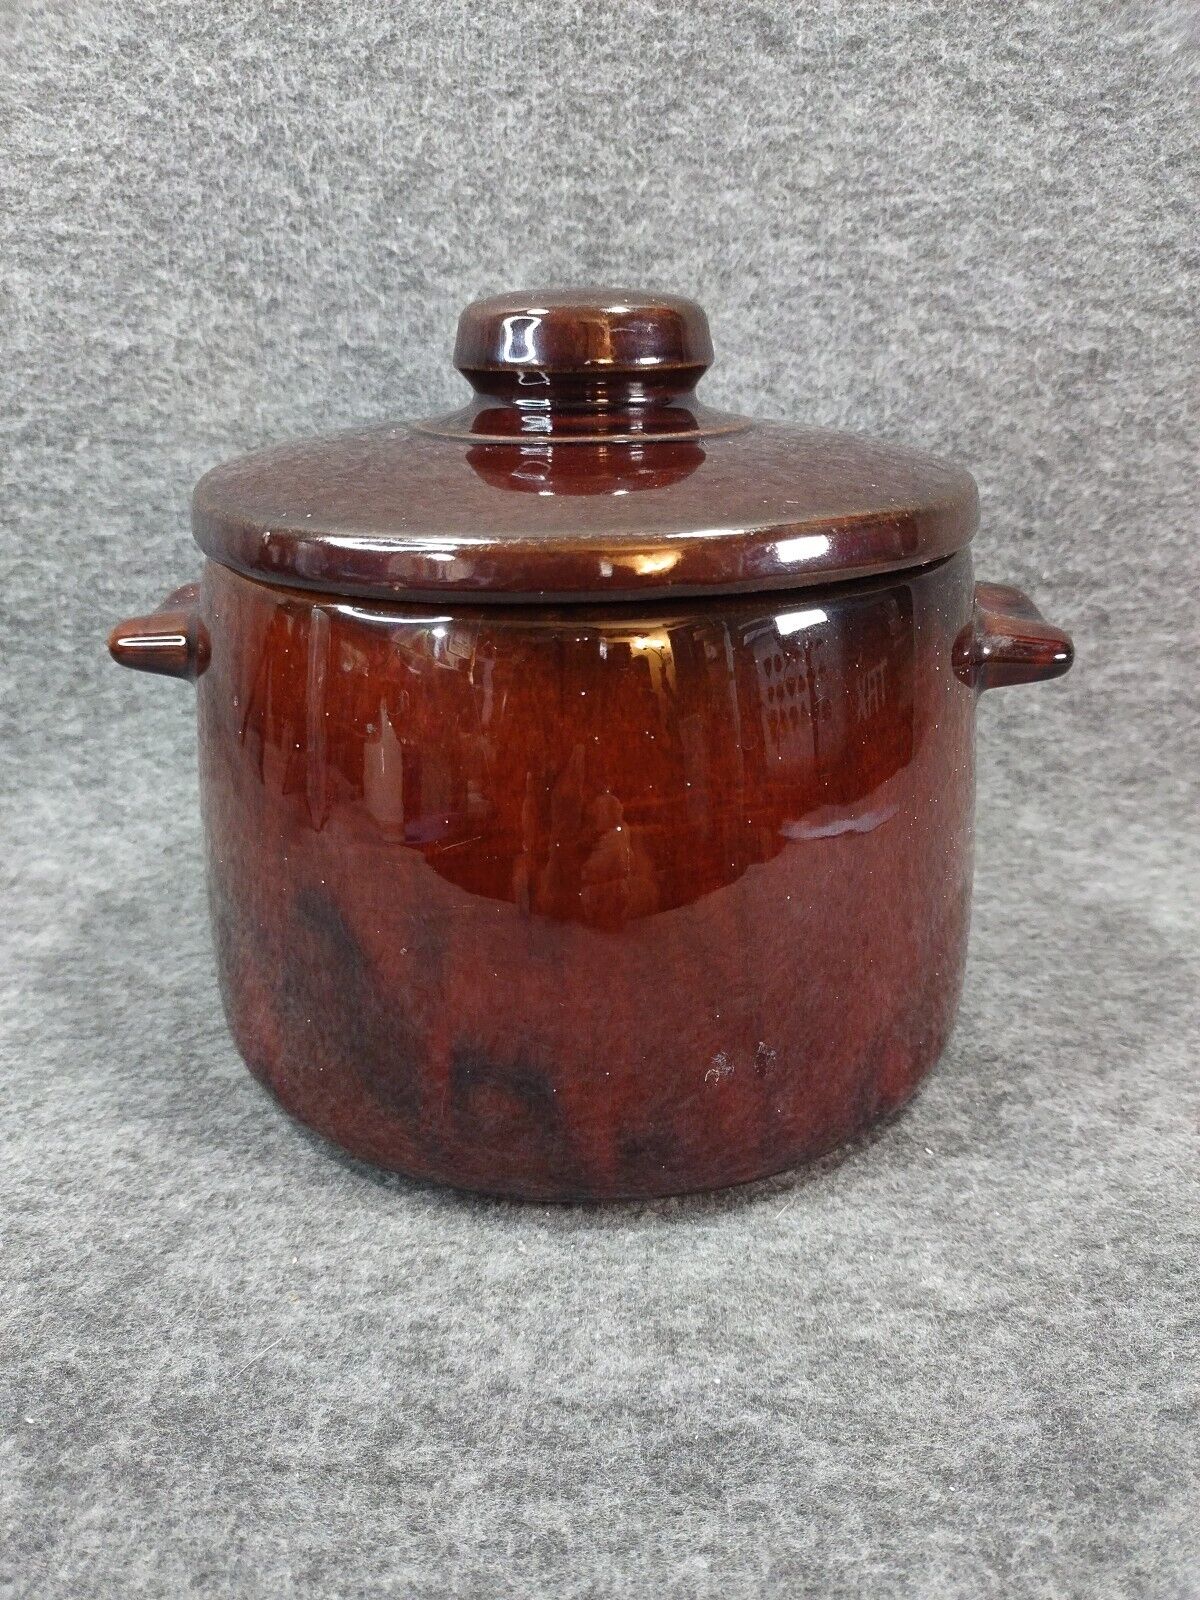 West Bend Vintage Bean Pot Crock Brown Glazed Stoneware W/Lid USA Pottery 1950’s